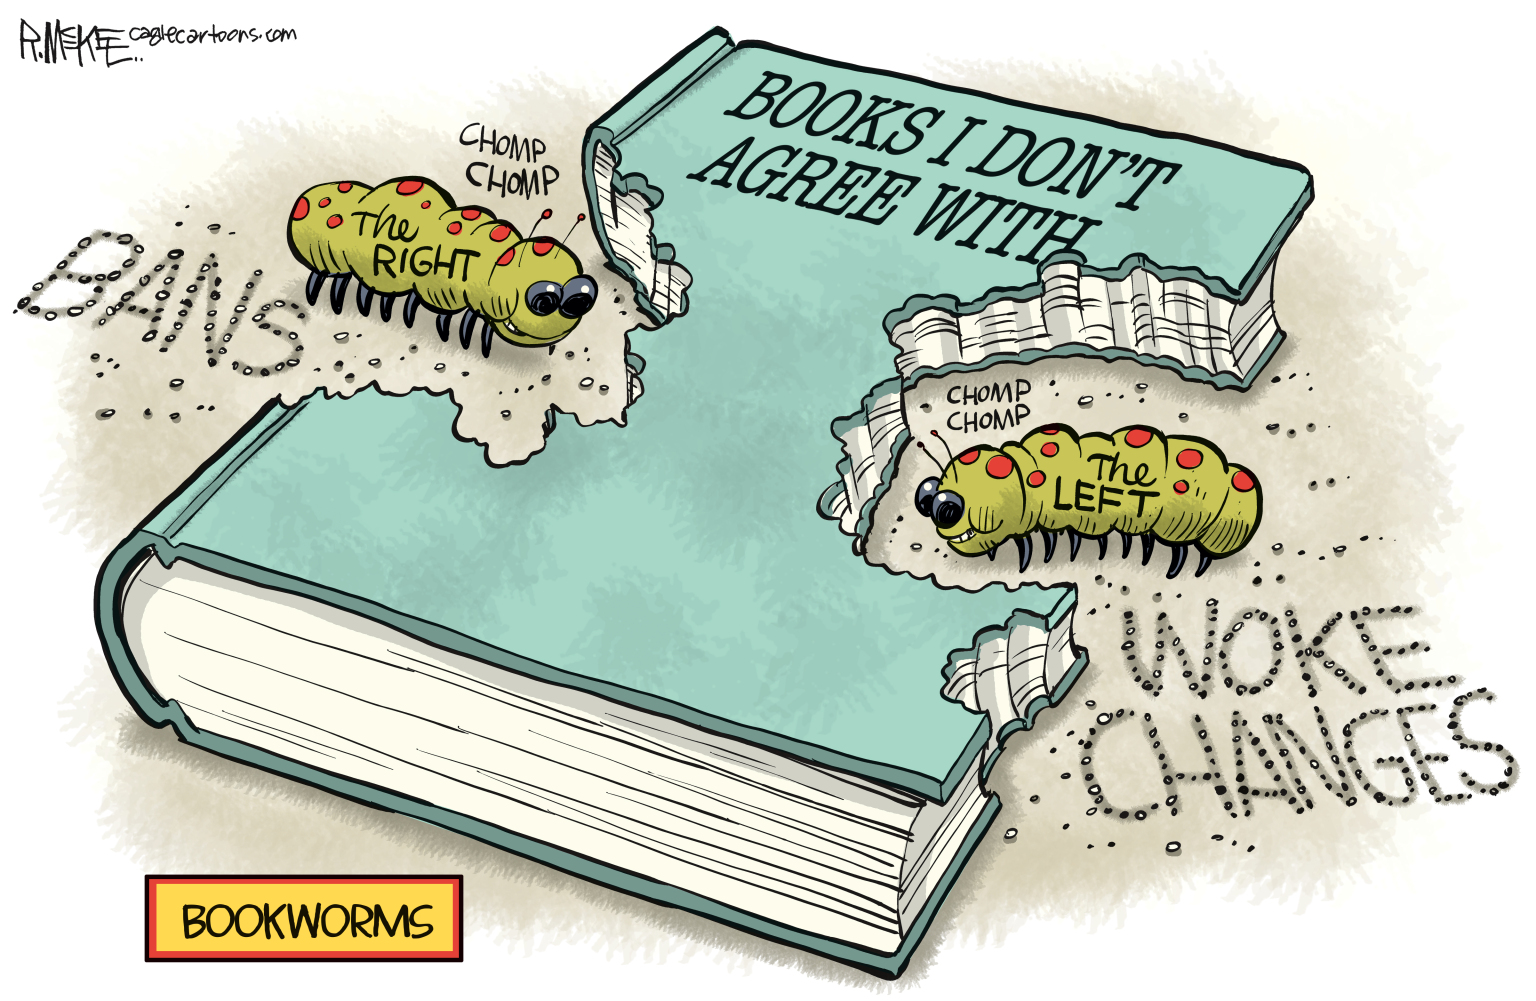 Bookworm Attacks - By Rick McKee